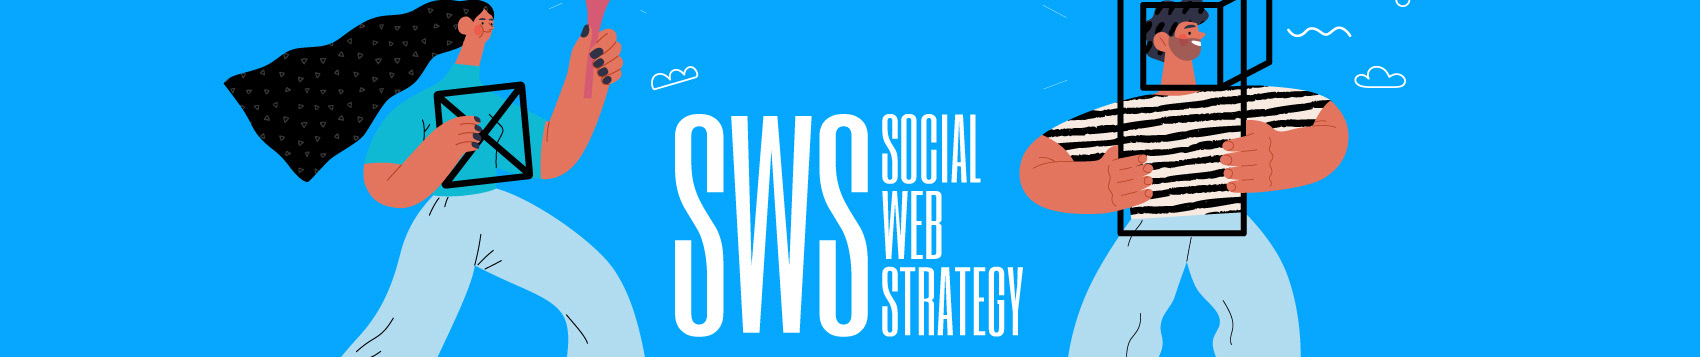 Social Web Strategy's profile banner